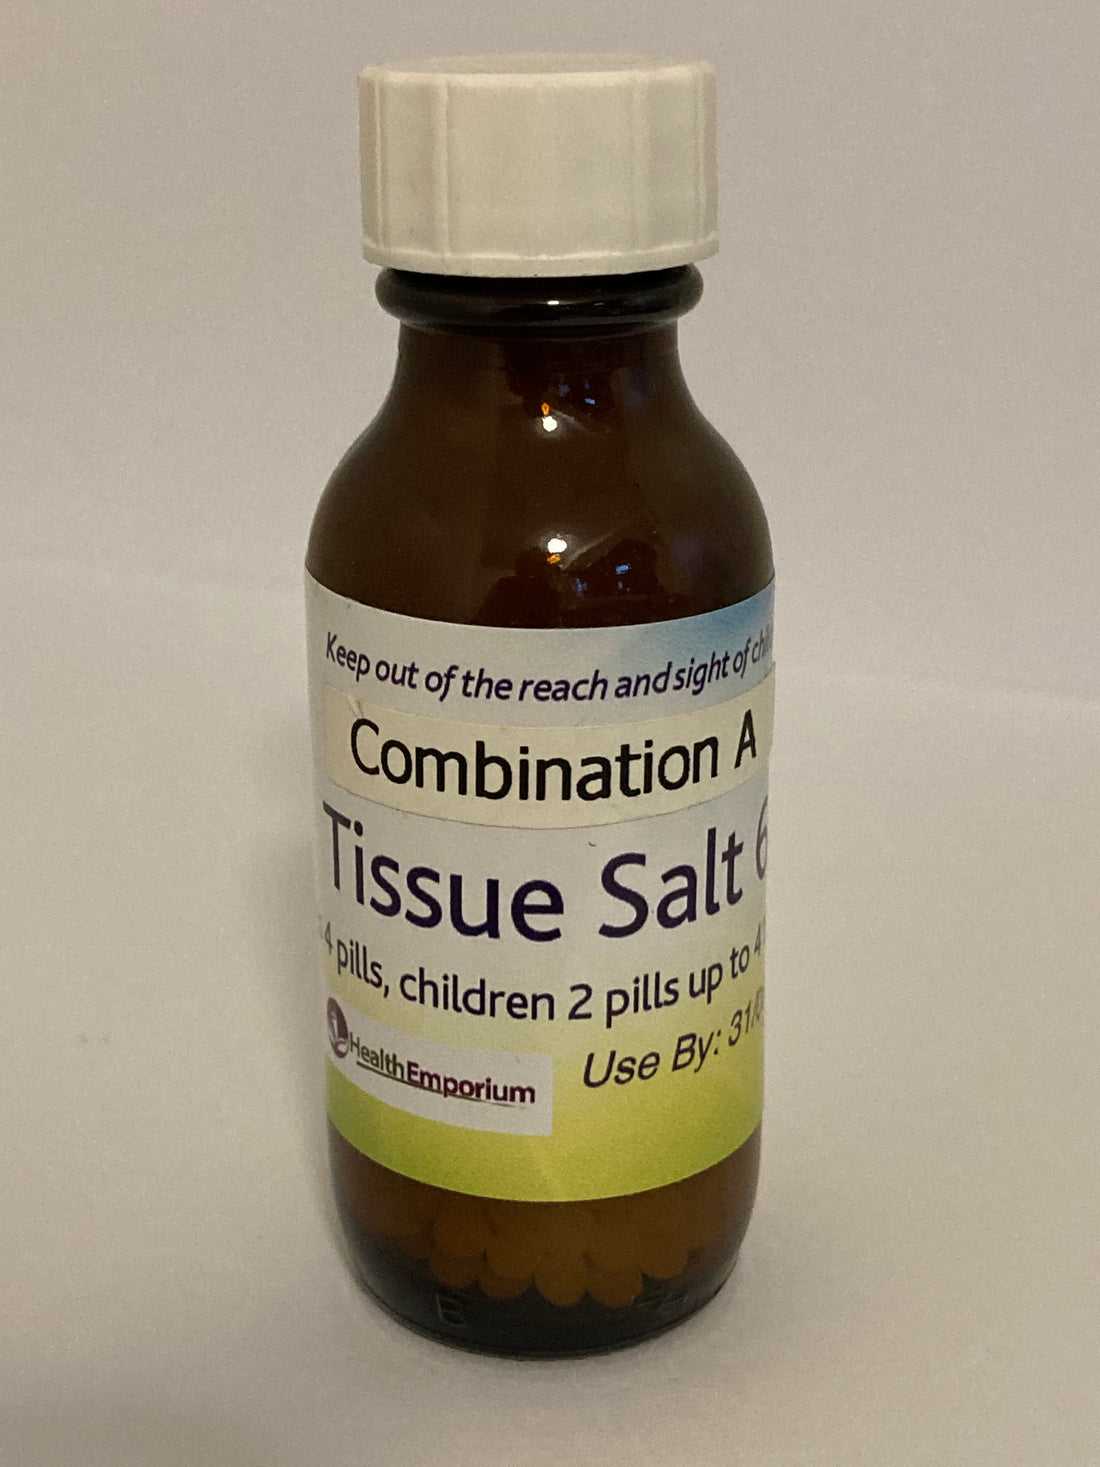 Combination A Tissue Salt